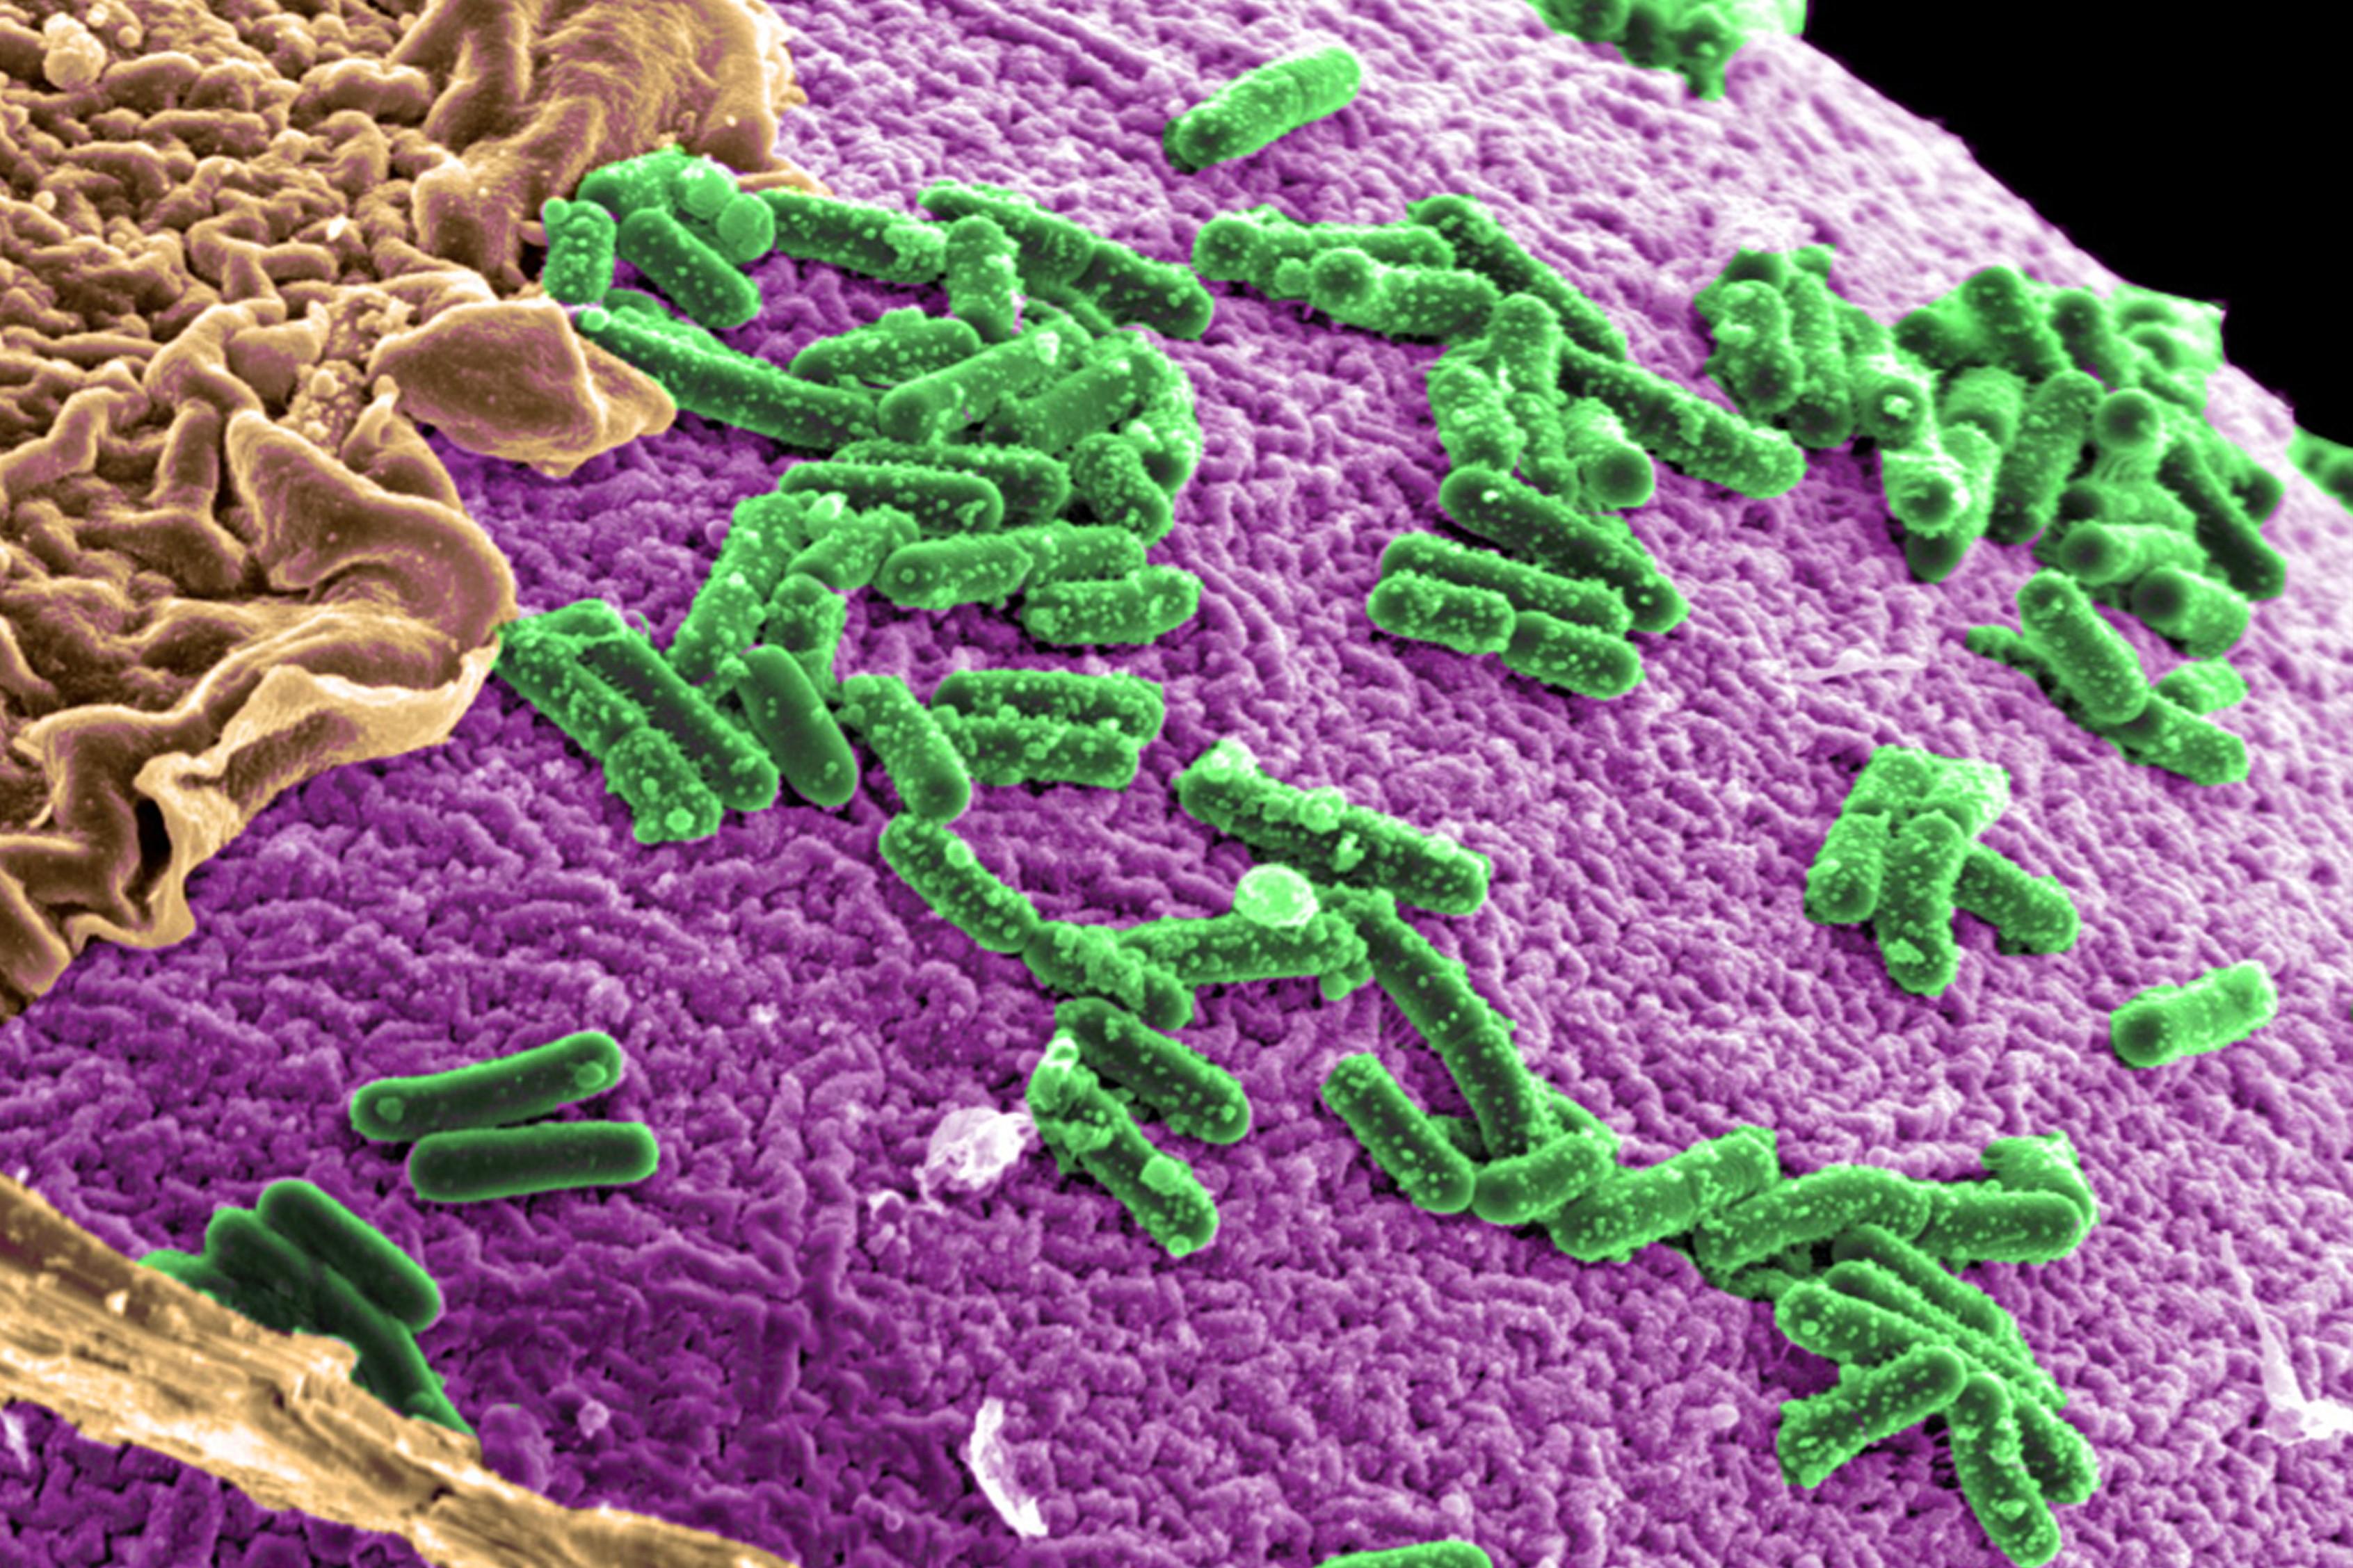 Gut microbe. Image credit: NIAID